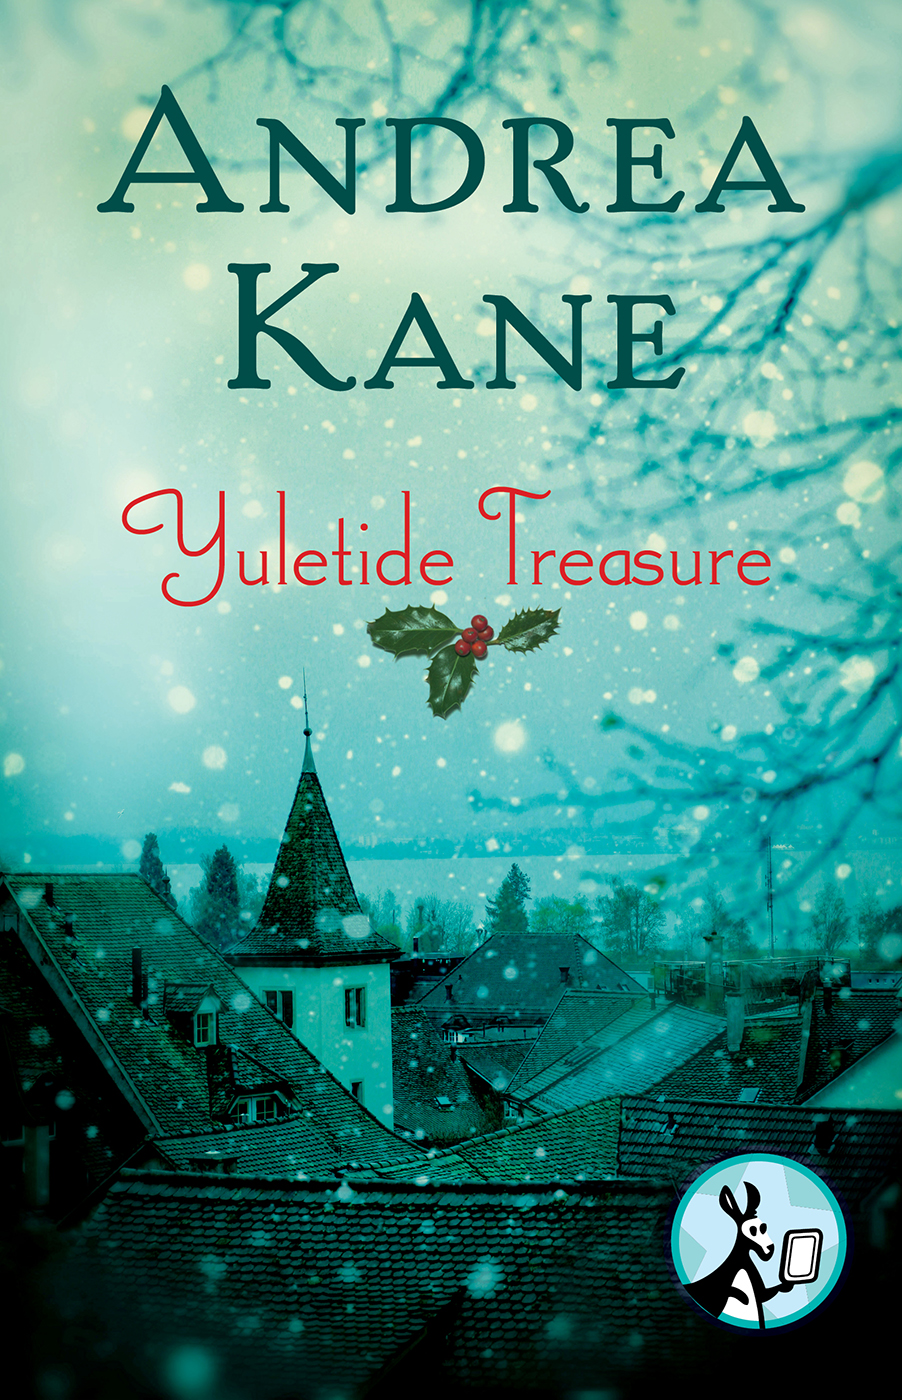 Yuletide Treasure by Andrea Kane